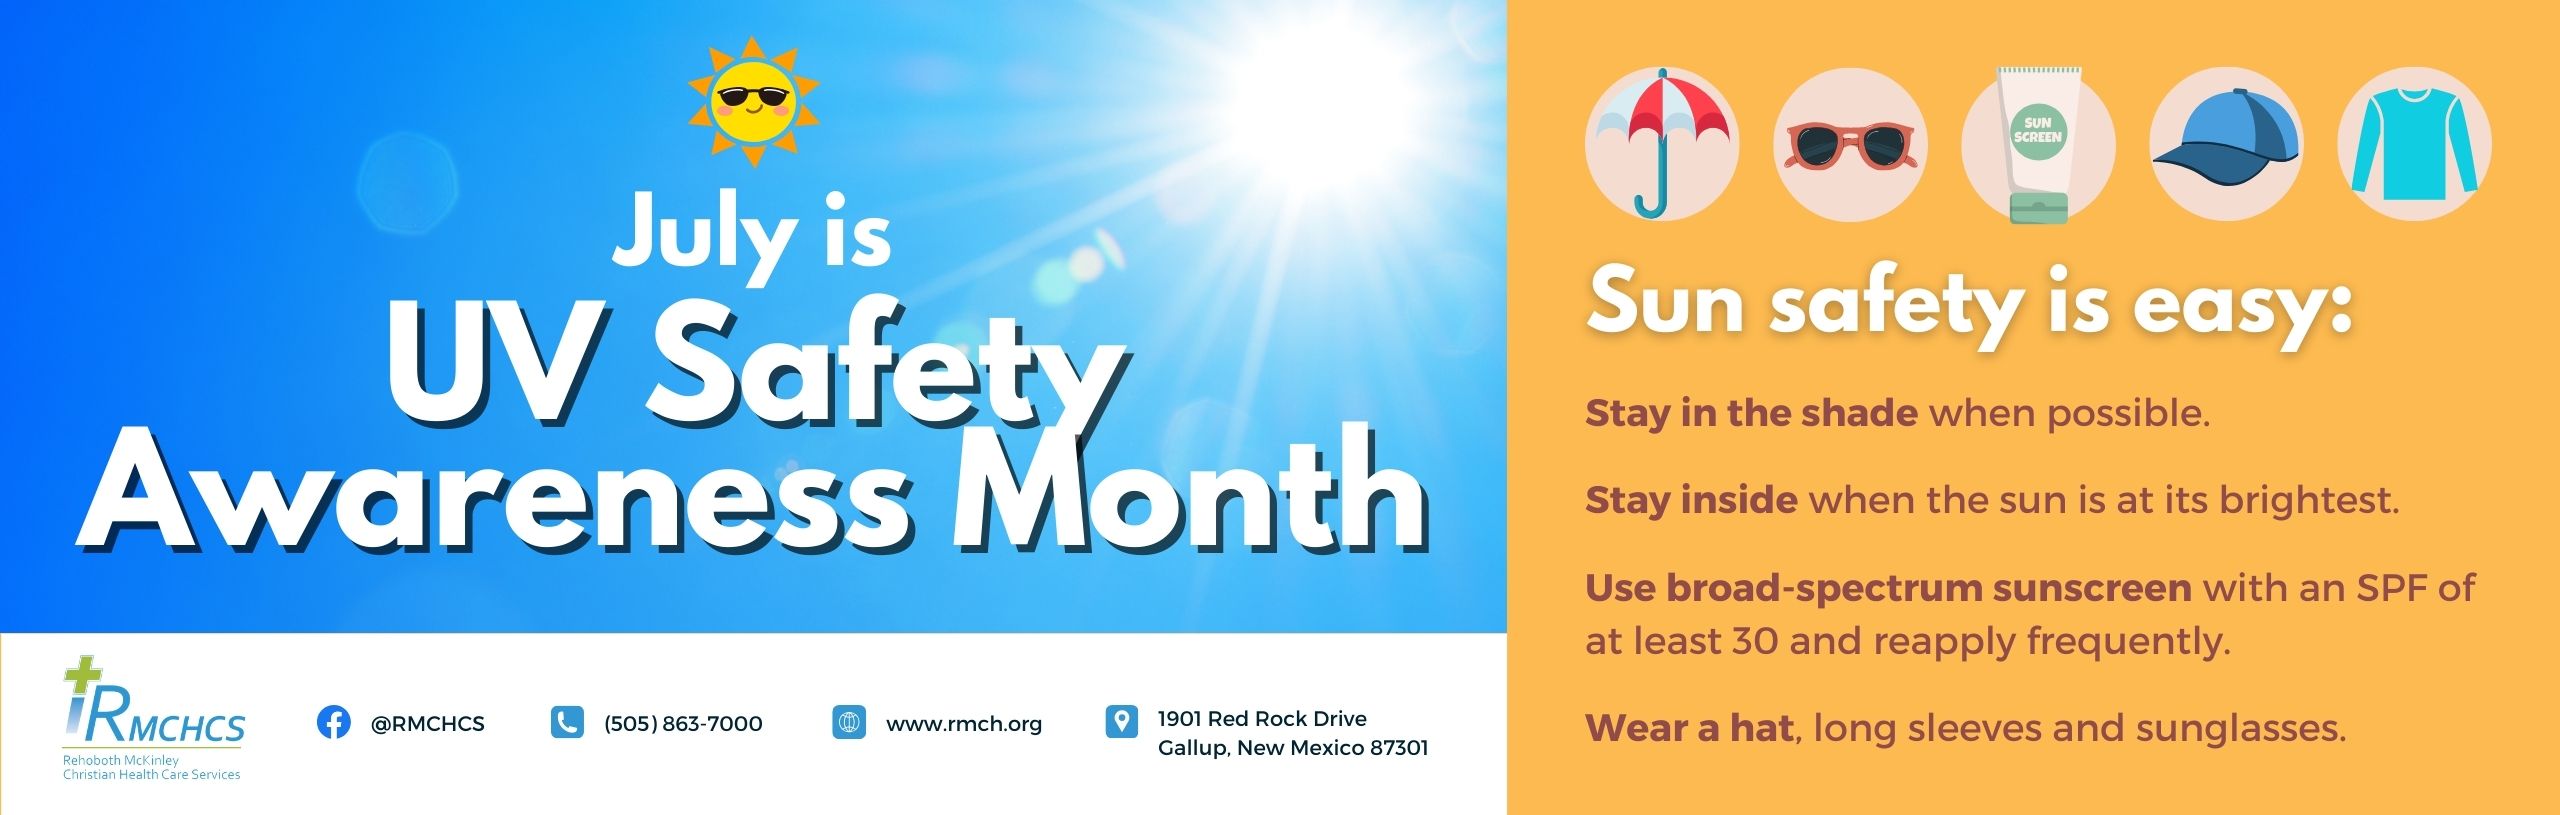 July Uv safety month